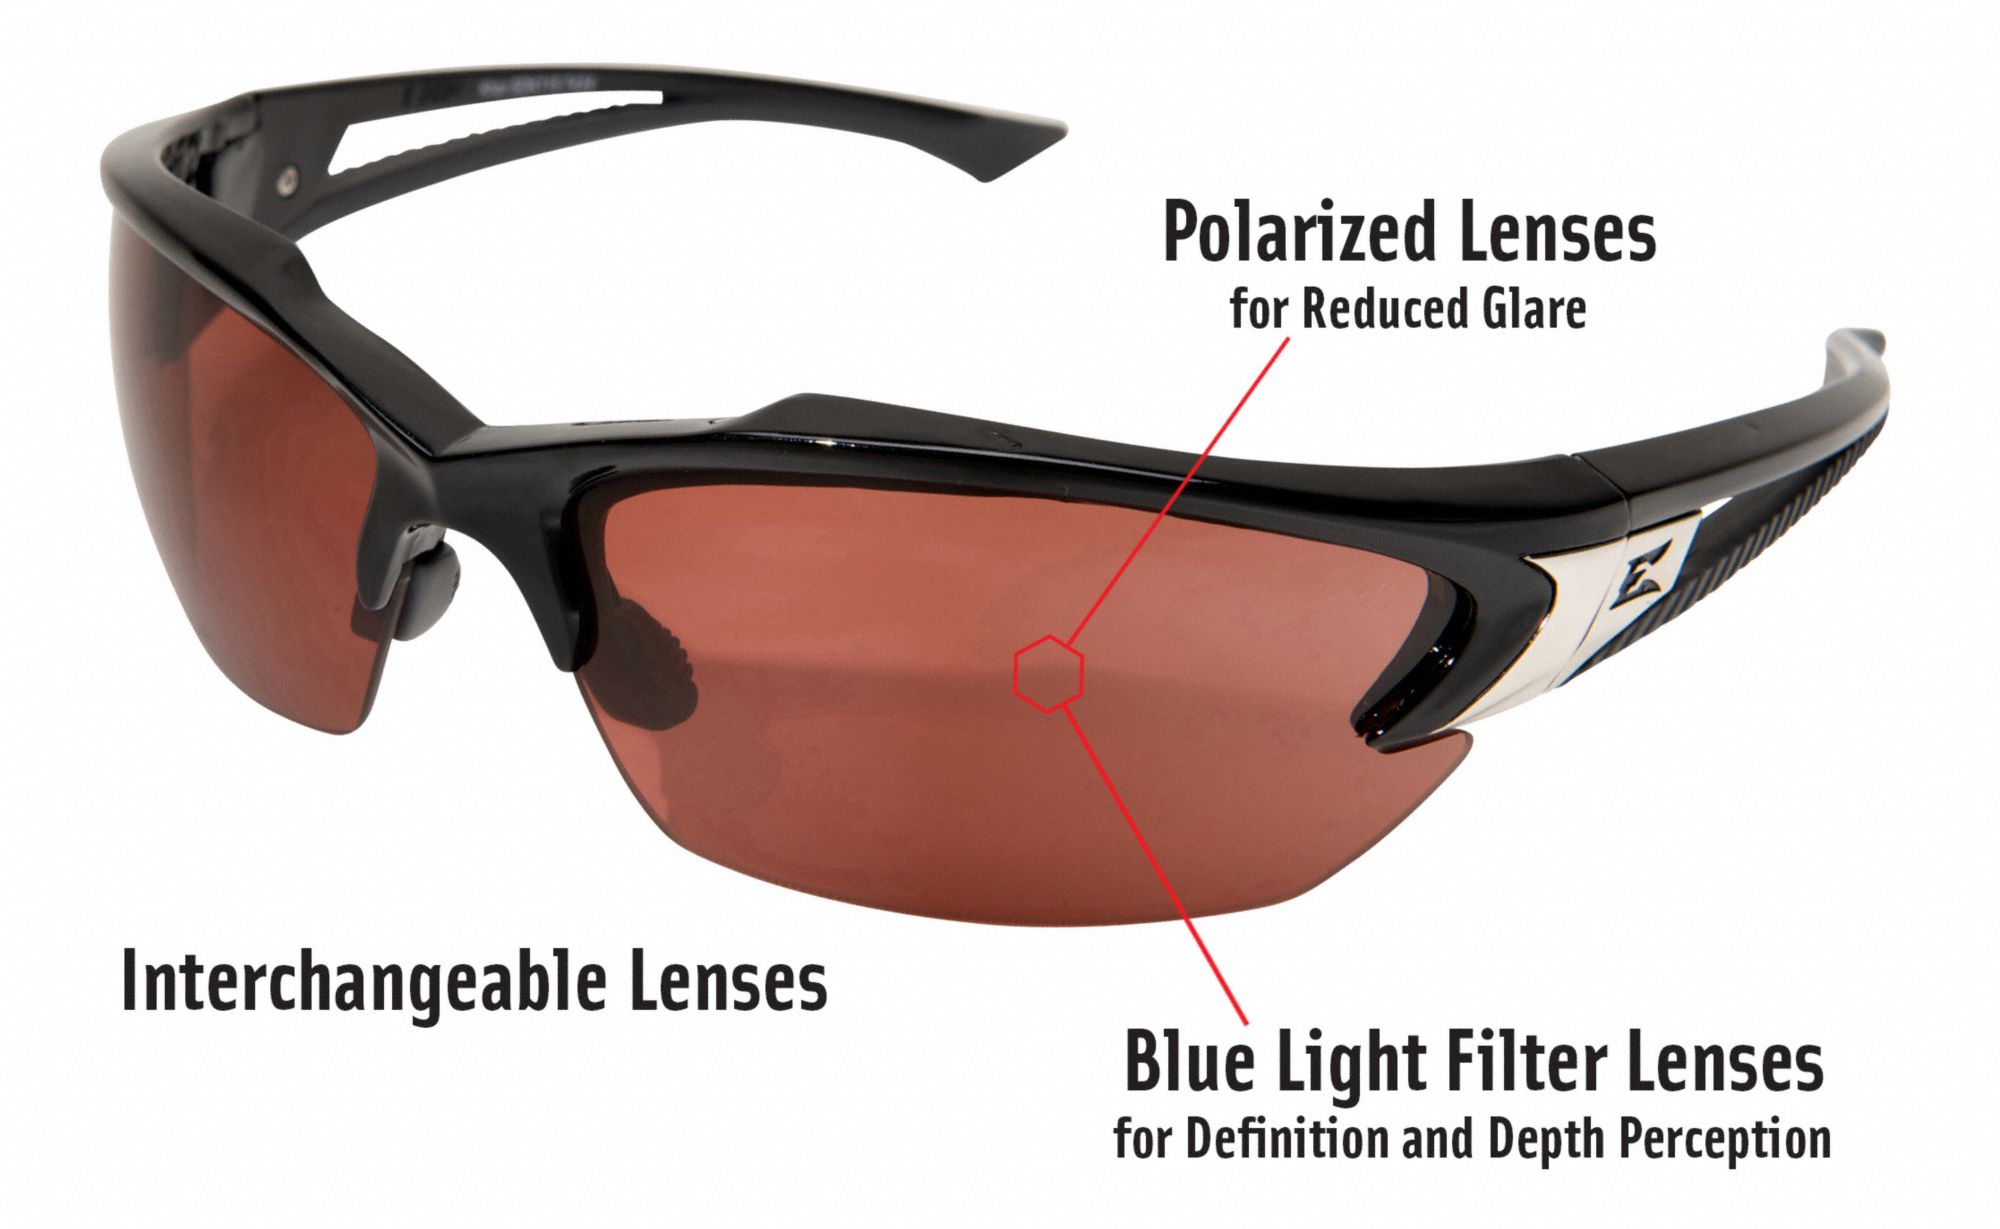 Z87+ Safety Glasses, Edge Pumori